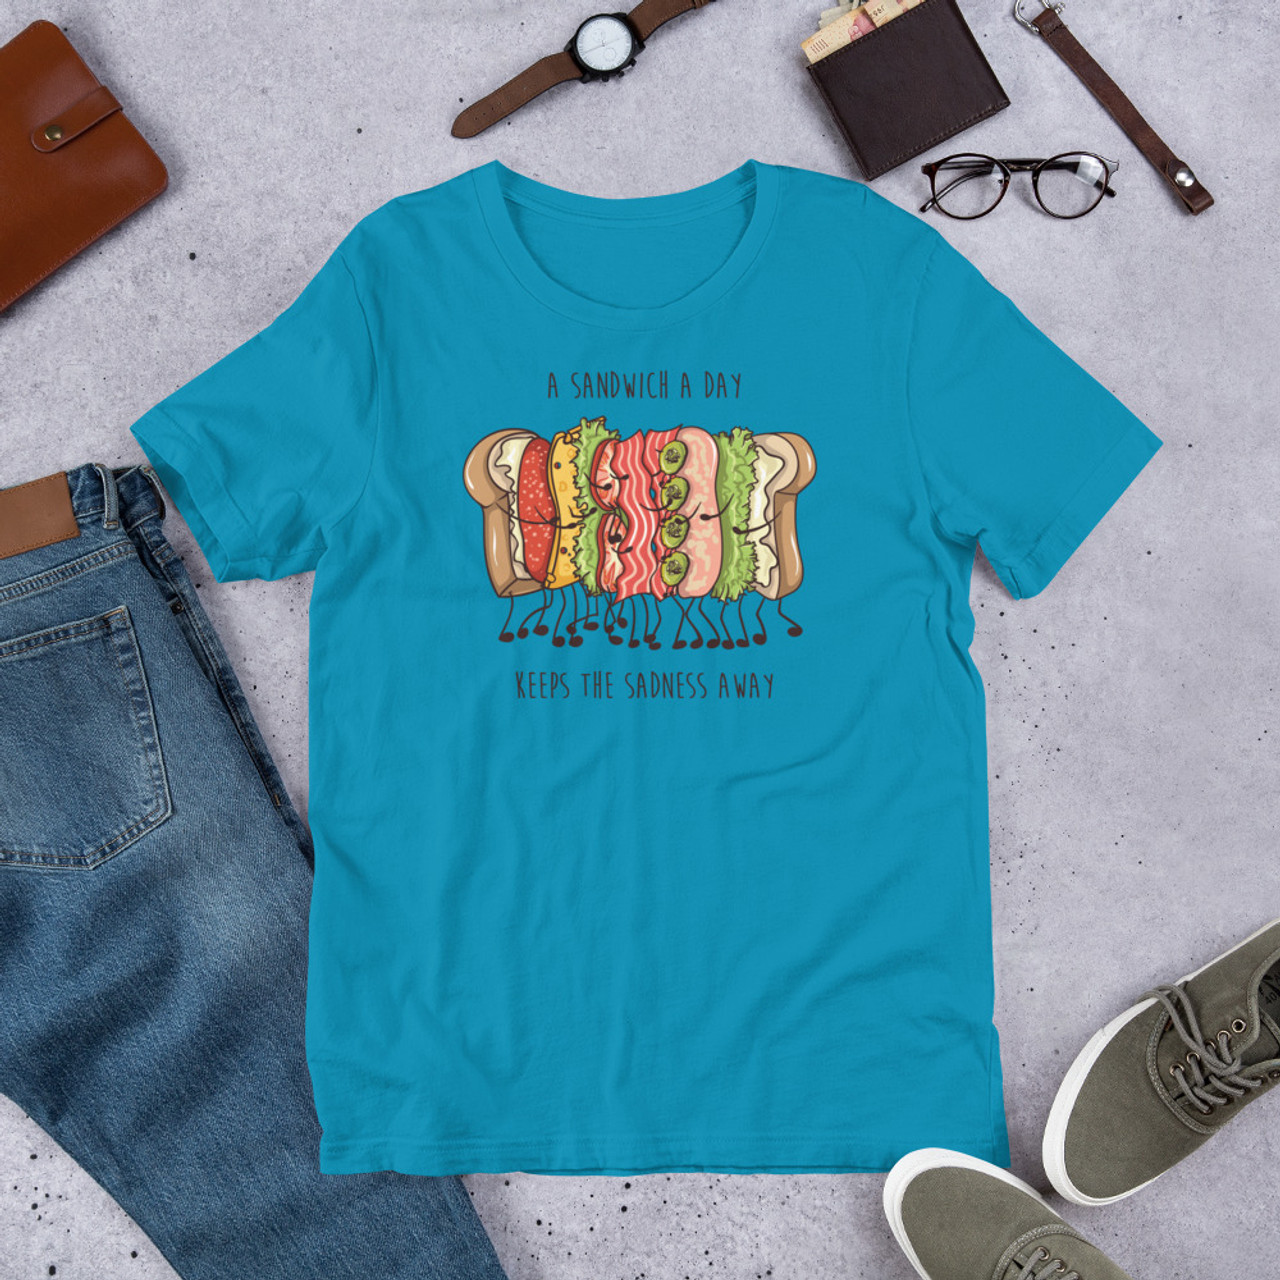 Aqua T-Shirt - Bella + Canvas 3001 A Sandwich a Day